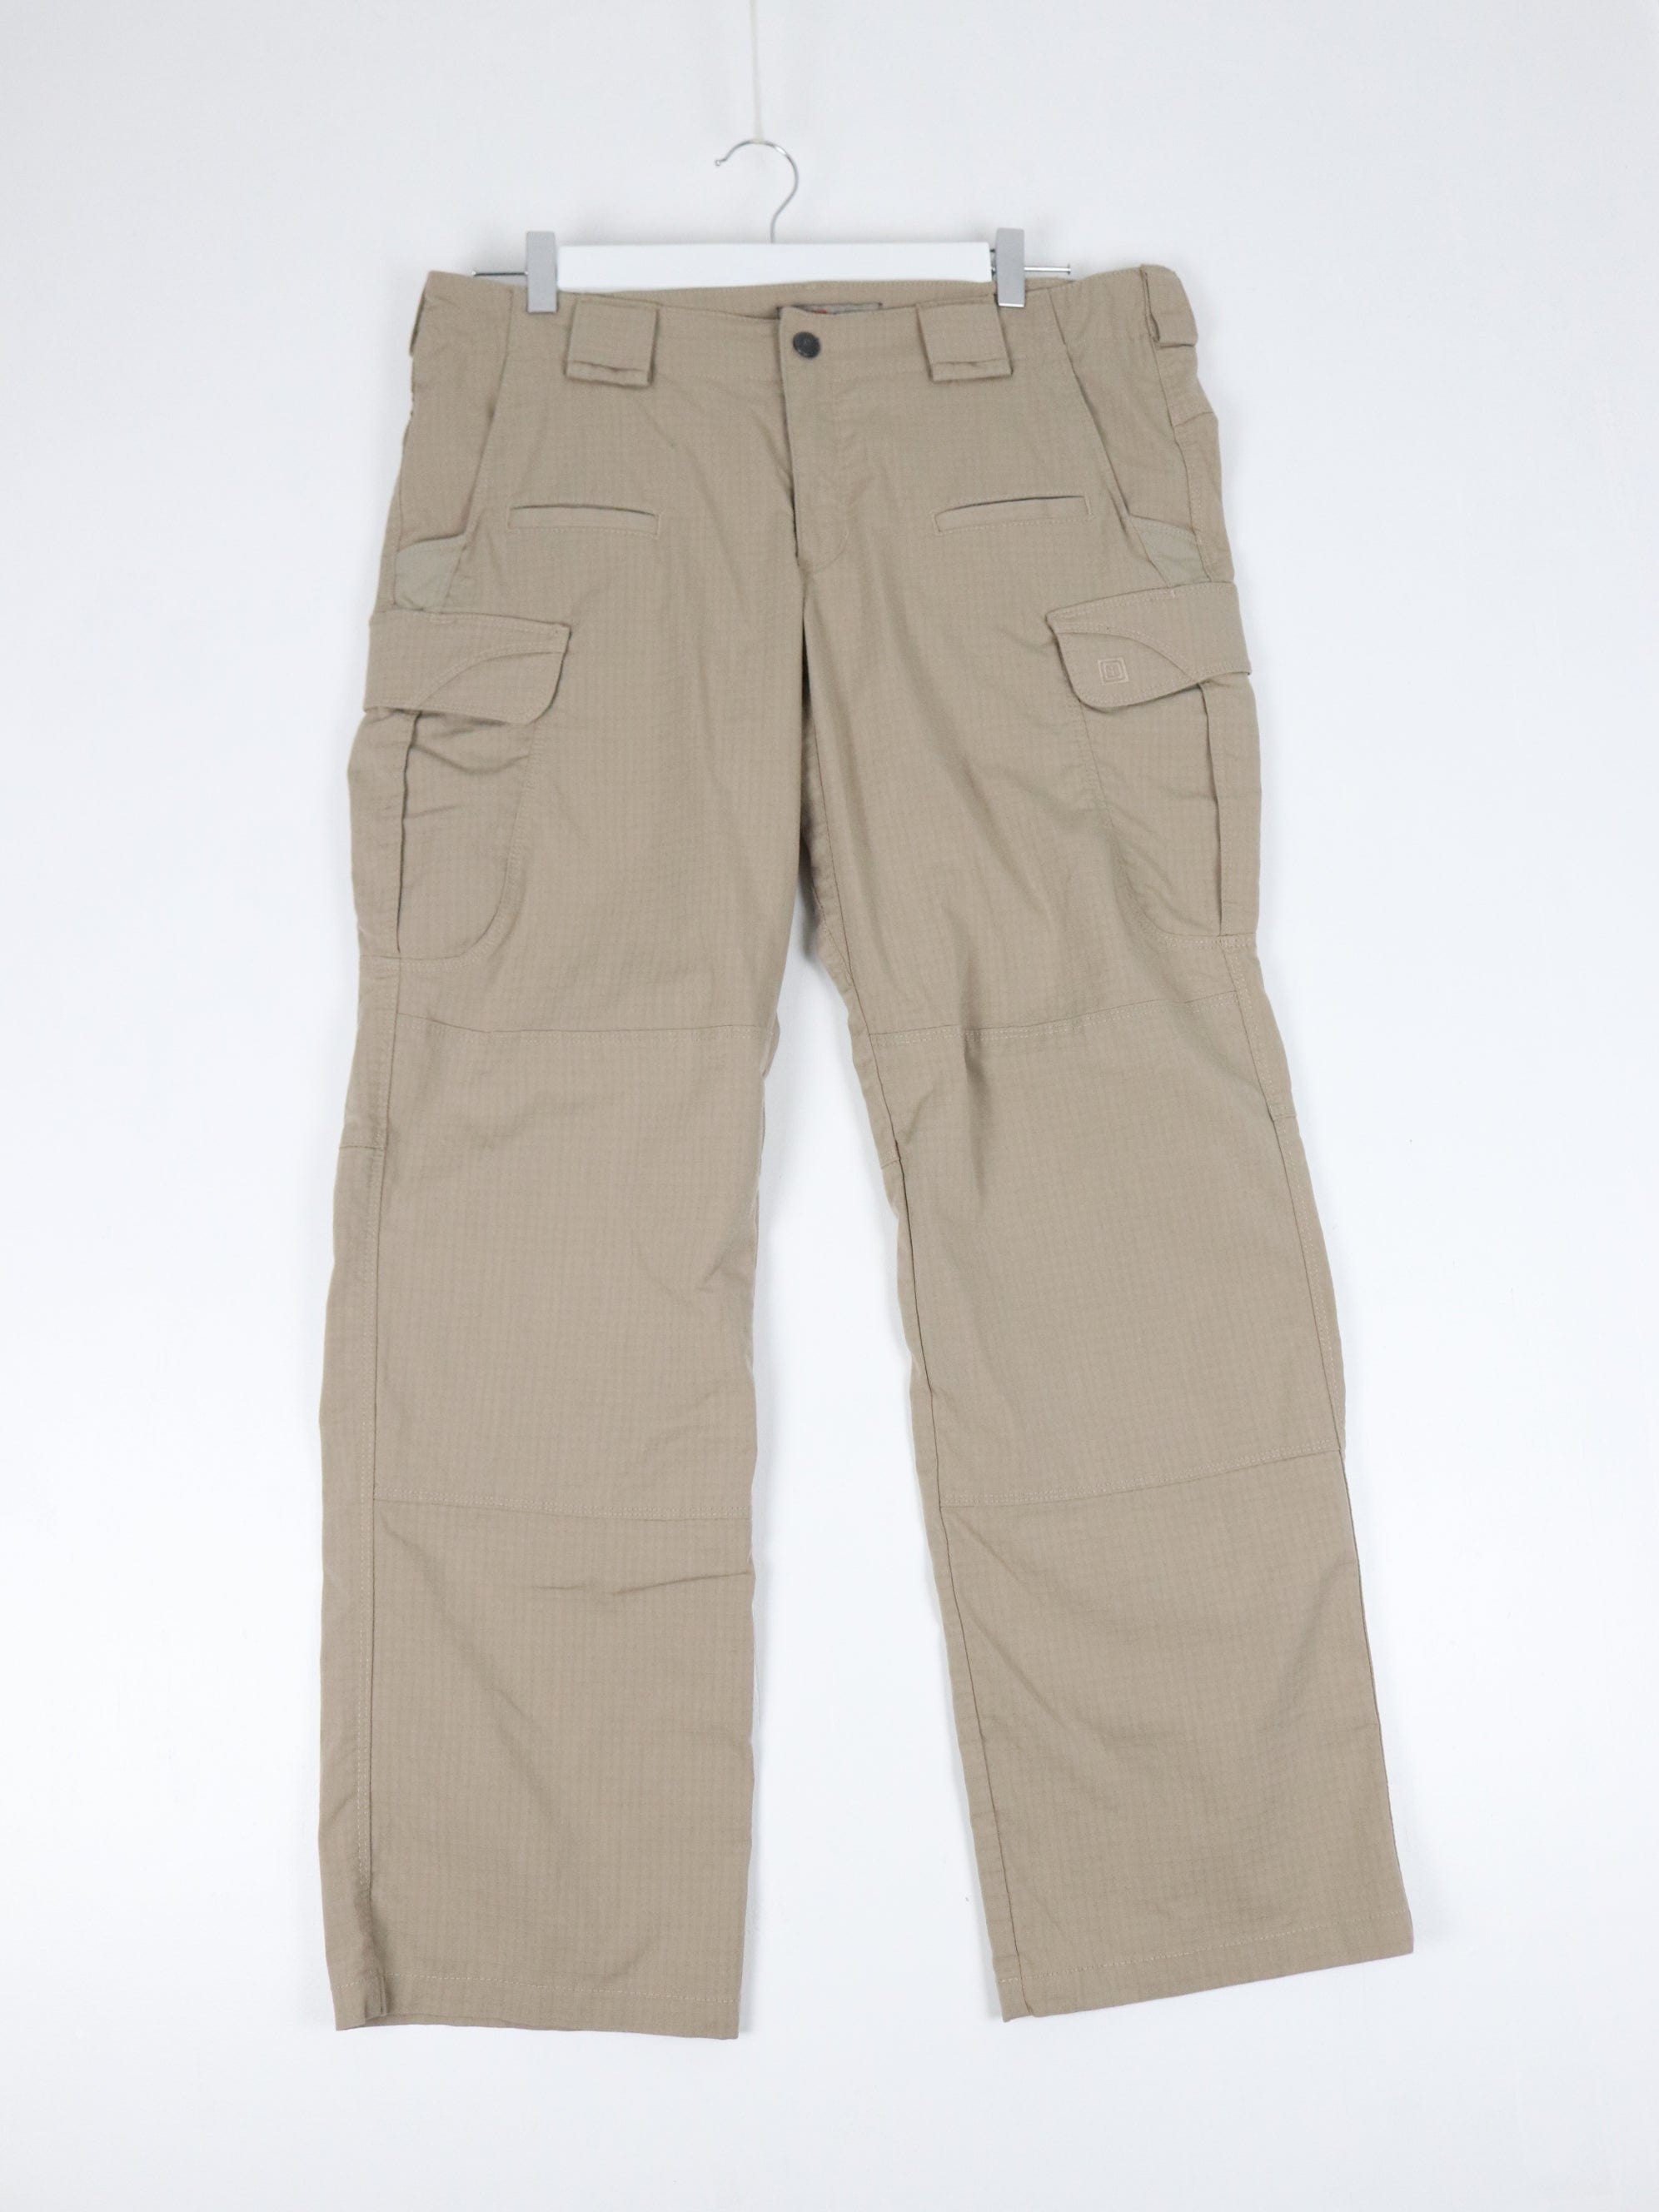 5.11 Tactical Pants Womens 14 Beige Cargo Work Wear Utility – Proper Vintage